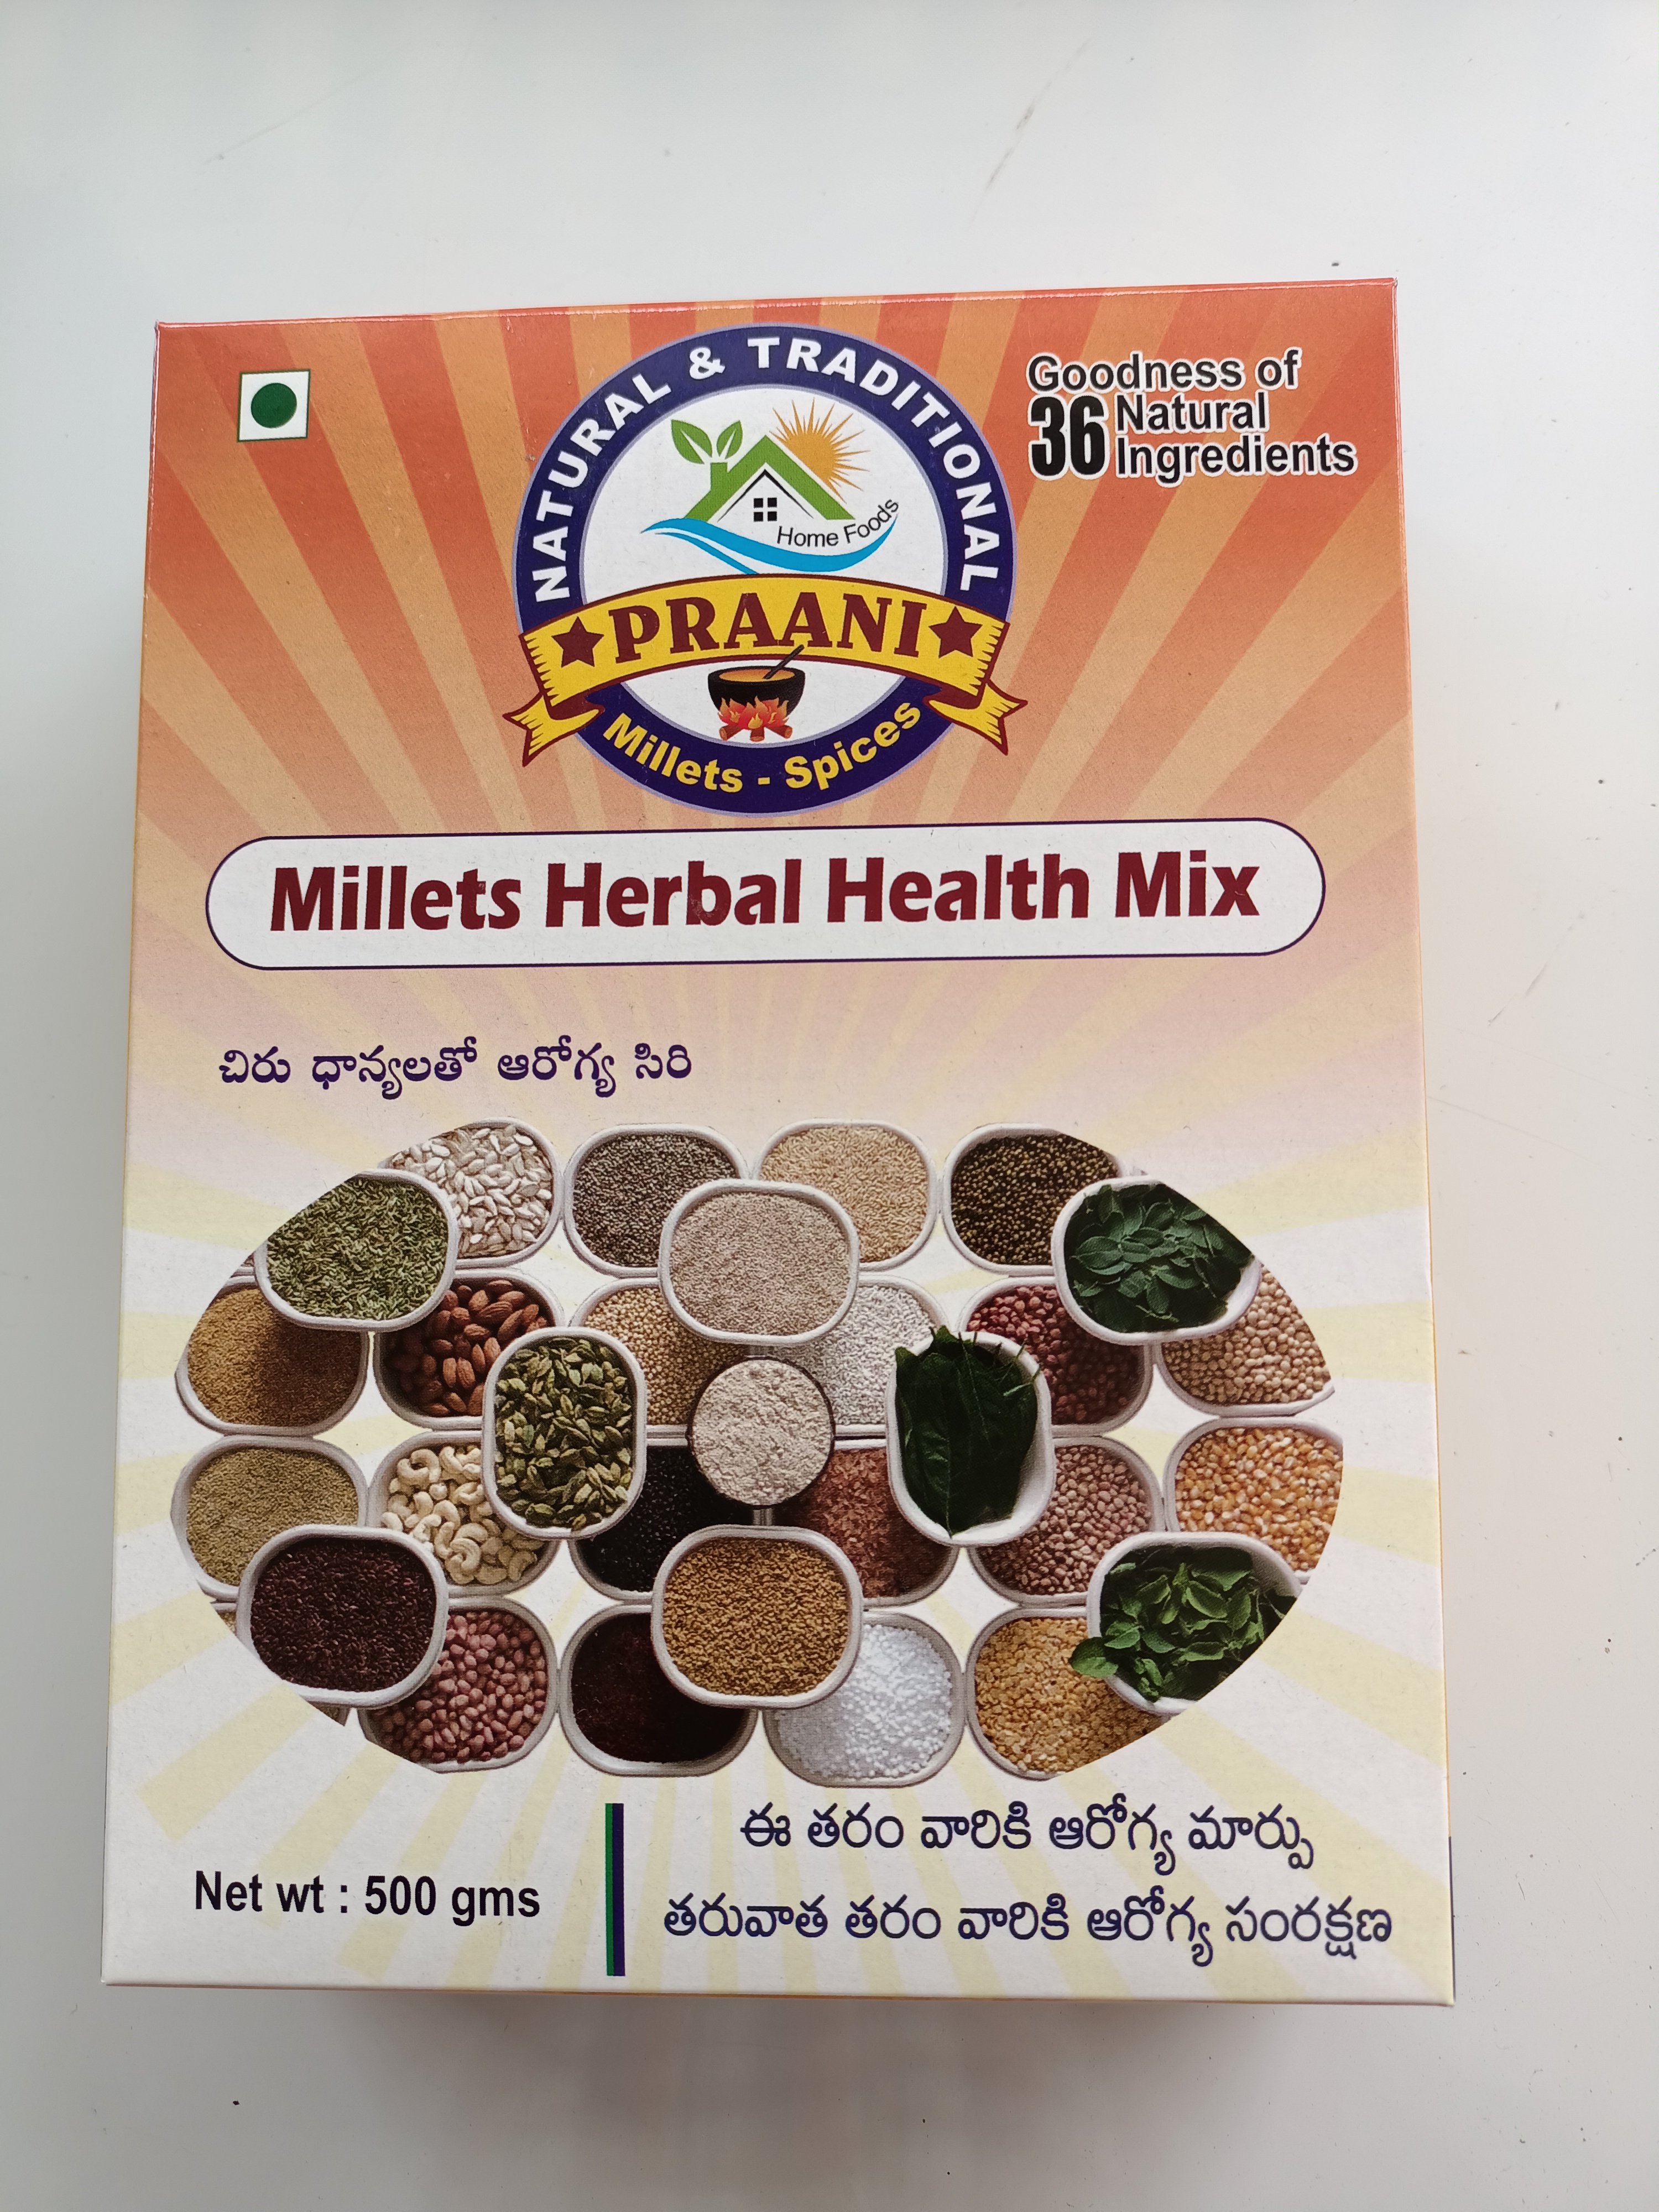 Millets Herbal Health Mix (Prani Natural & Traditional) 500gms Box